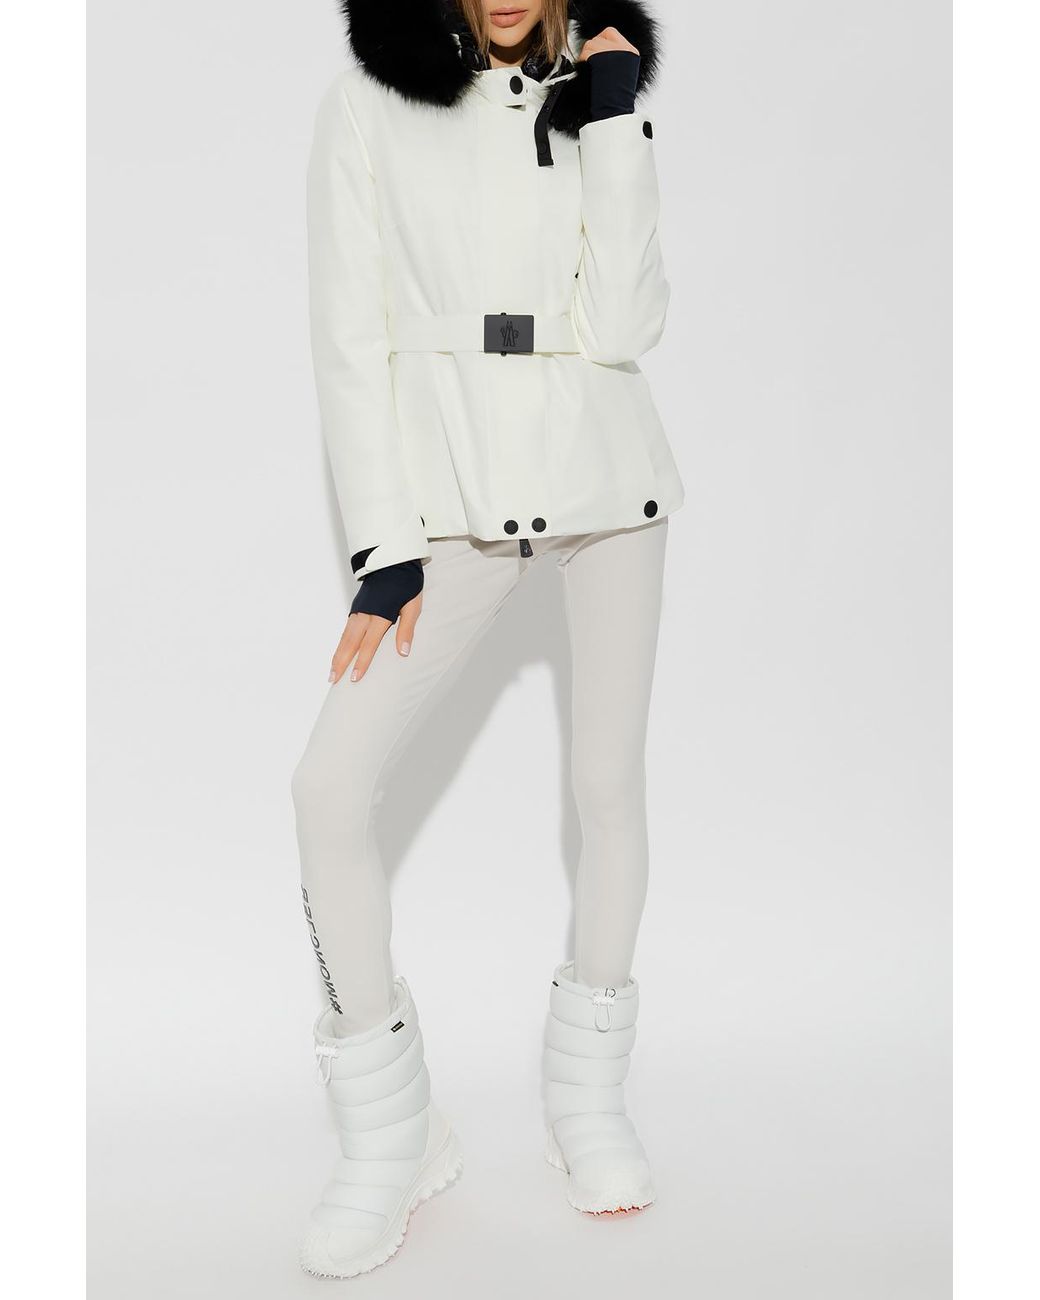 3 MONCLER GRENOBLE 'laplance' Ski Jacket in White | Lyst